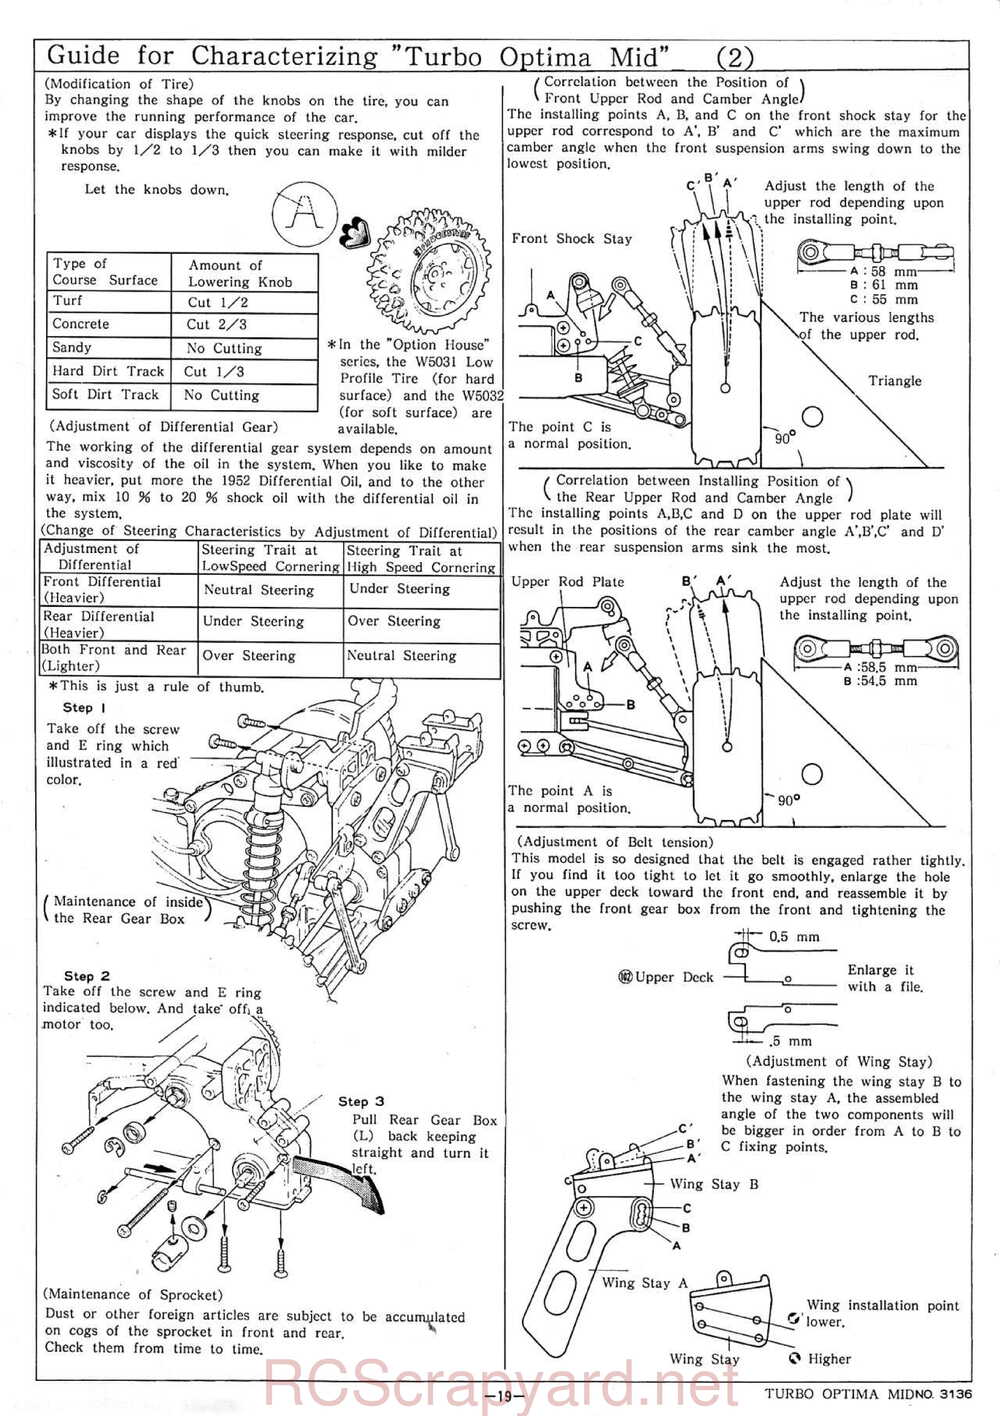 Kyosho - 3136 - Turbo-Optima-Mid - Manual - Page 19